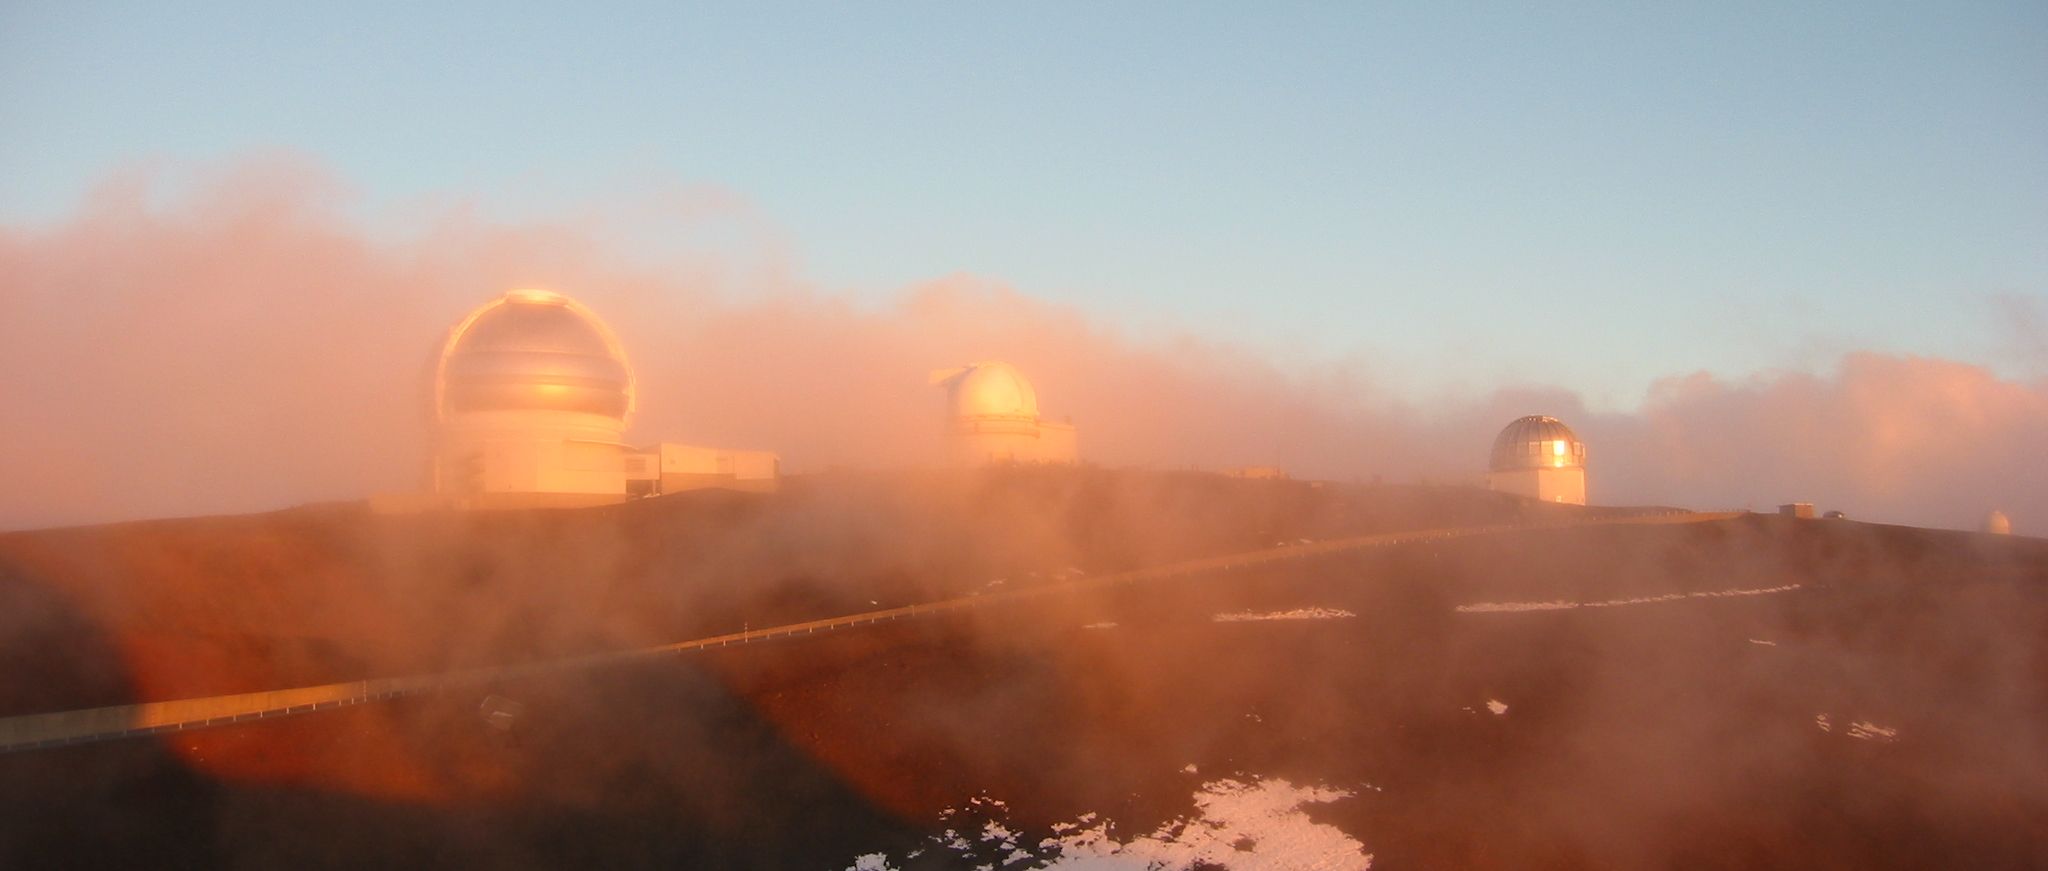 Mauna Kea Ri
dge in fog